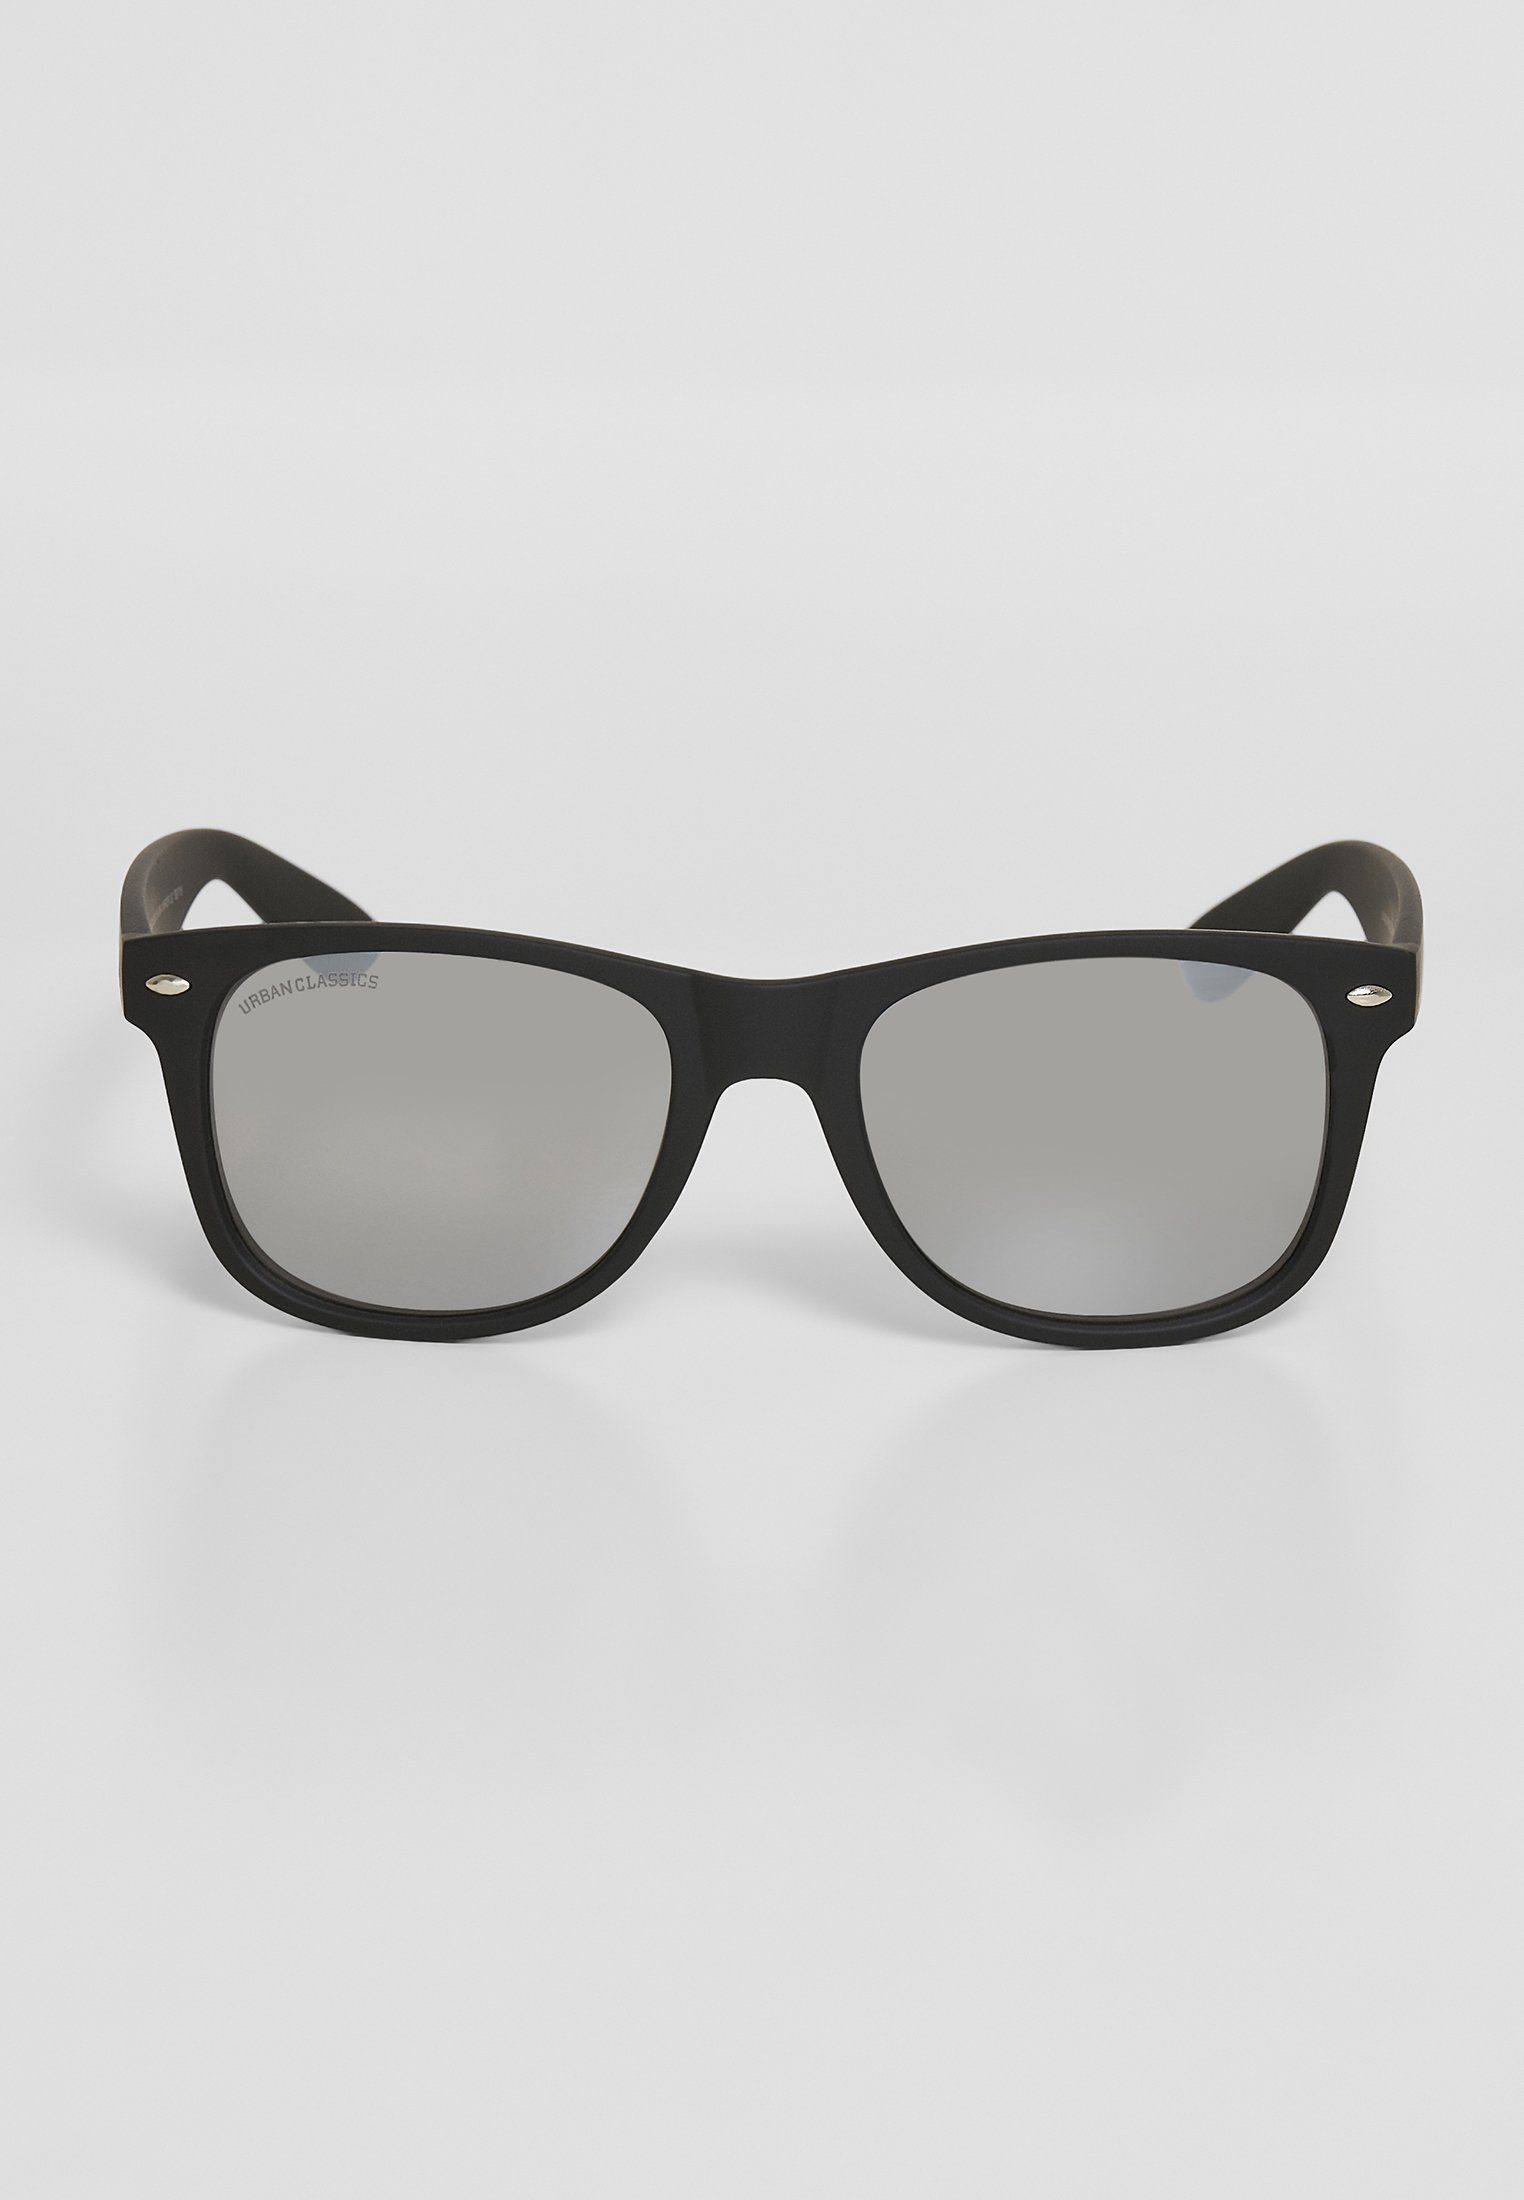 UC black/silver Likoma Mirror Sunglasses Accessoires CLASSICS Sonnenbrille URBAN